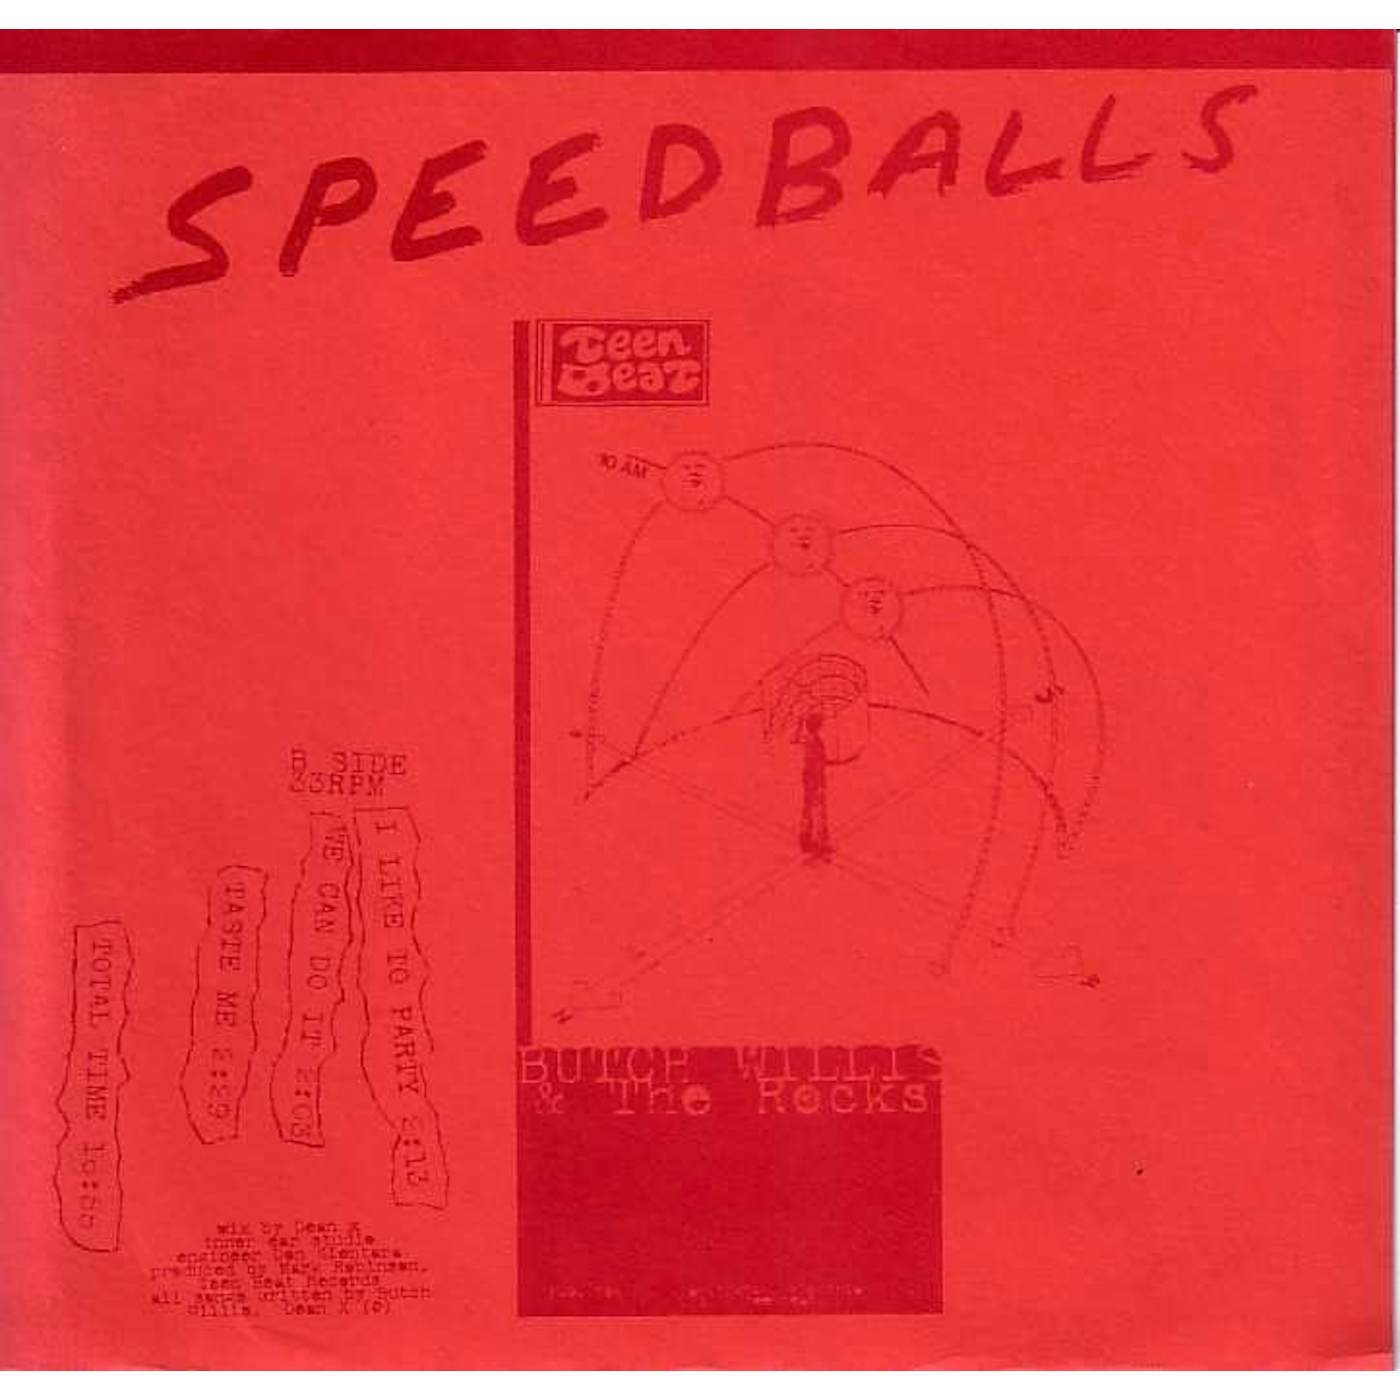 Butch Willis & The Rocks SPEEDBALLS Vinyl Record